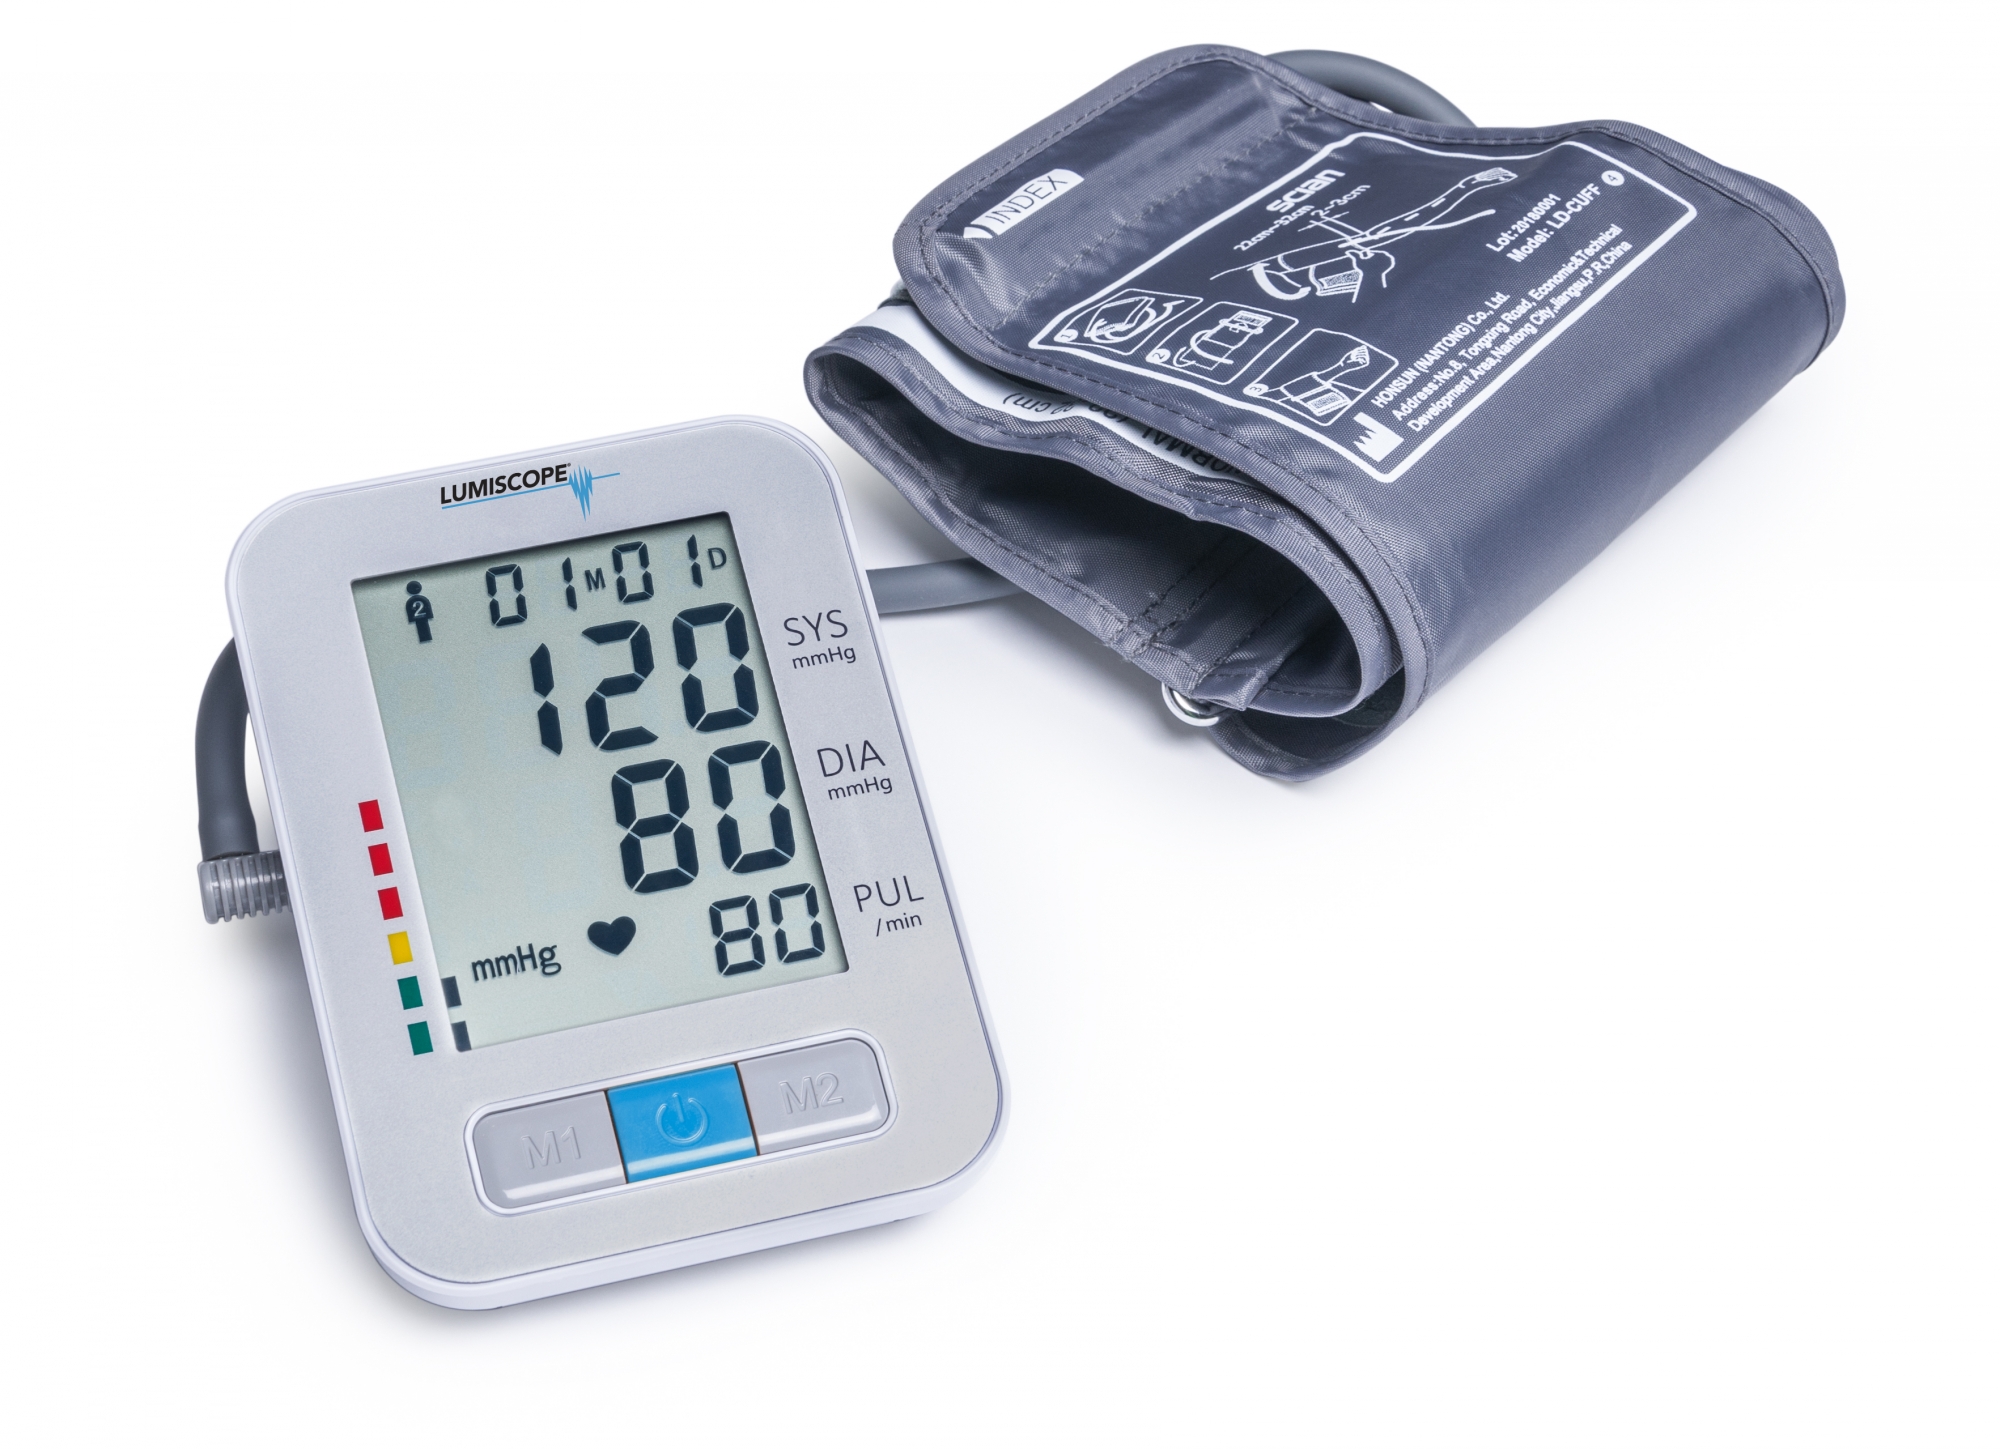 Армед тонометр купить. Измеритель давления Дигитал Блоод. Lumiscope диагностический тонометр. Lumiscope тонометр 1060. Тонометр fully Automatic Digital Wrist Blood Pressure Monitor model number w02.